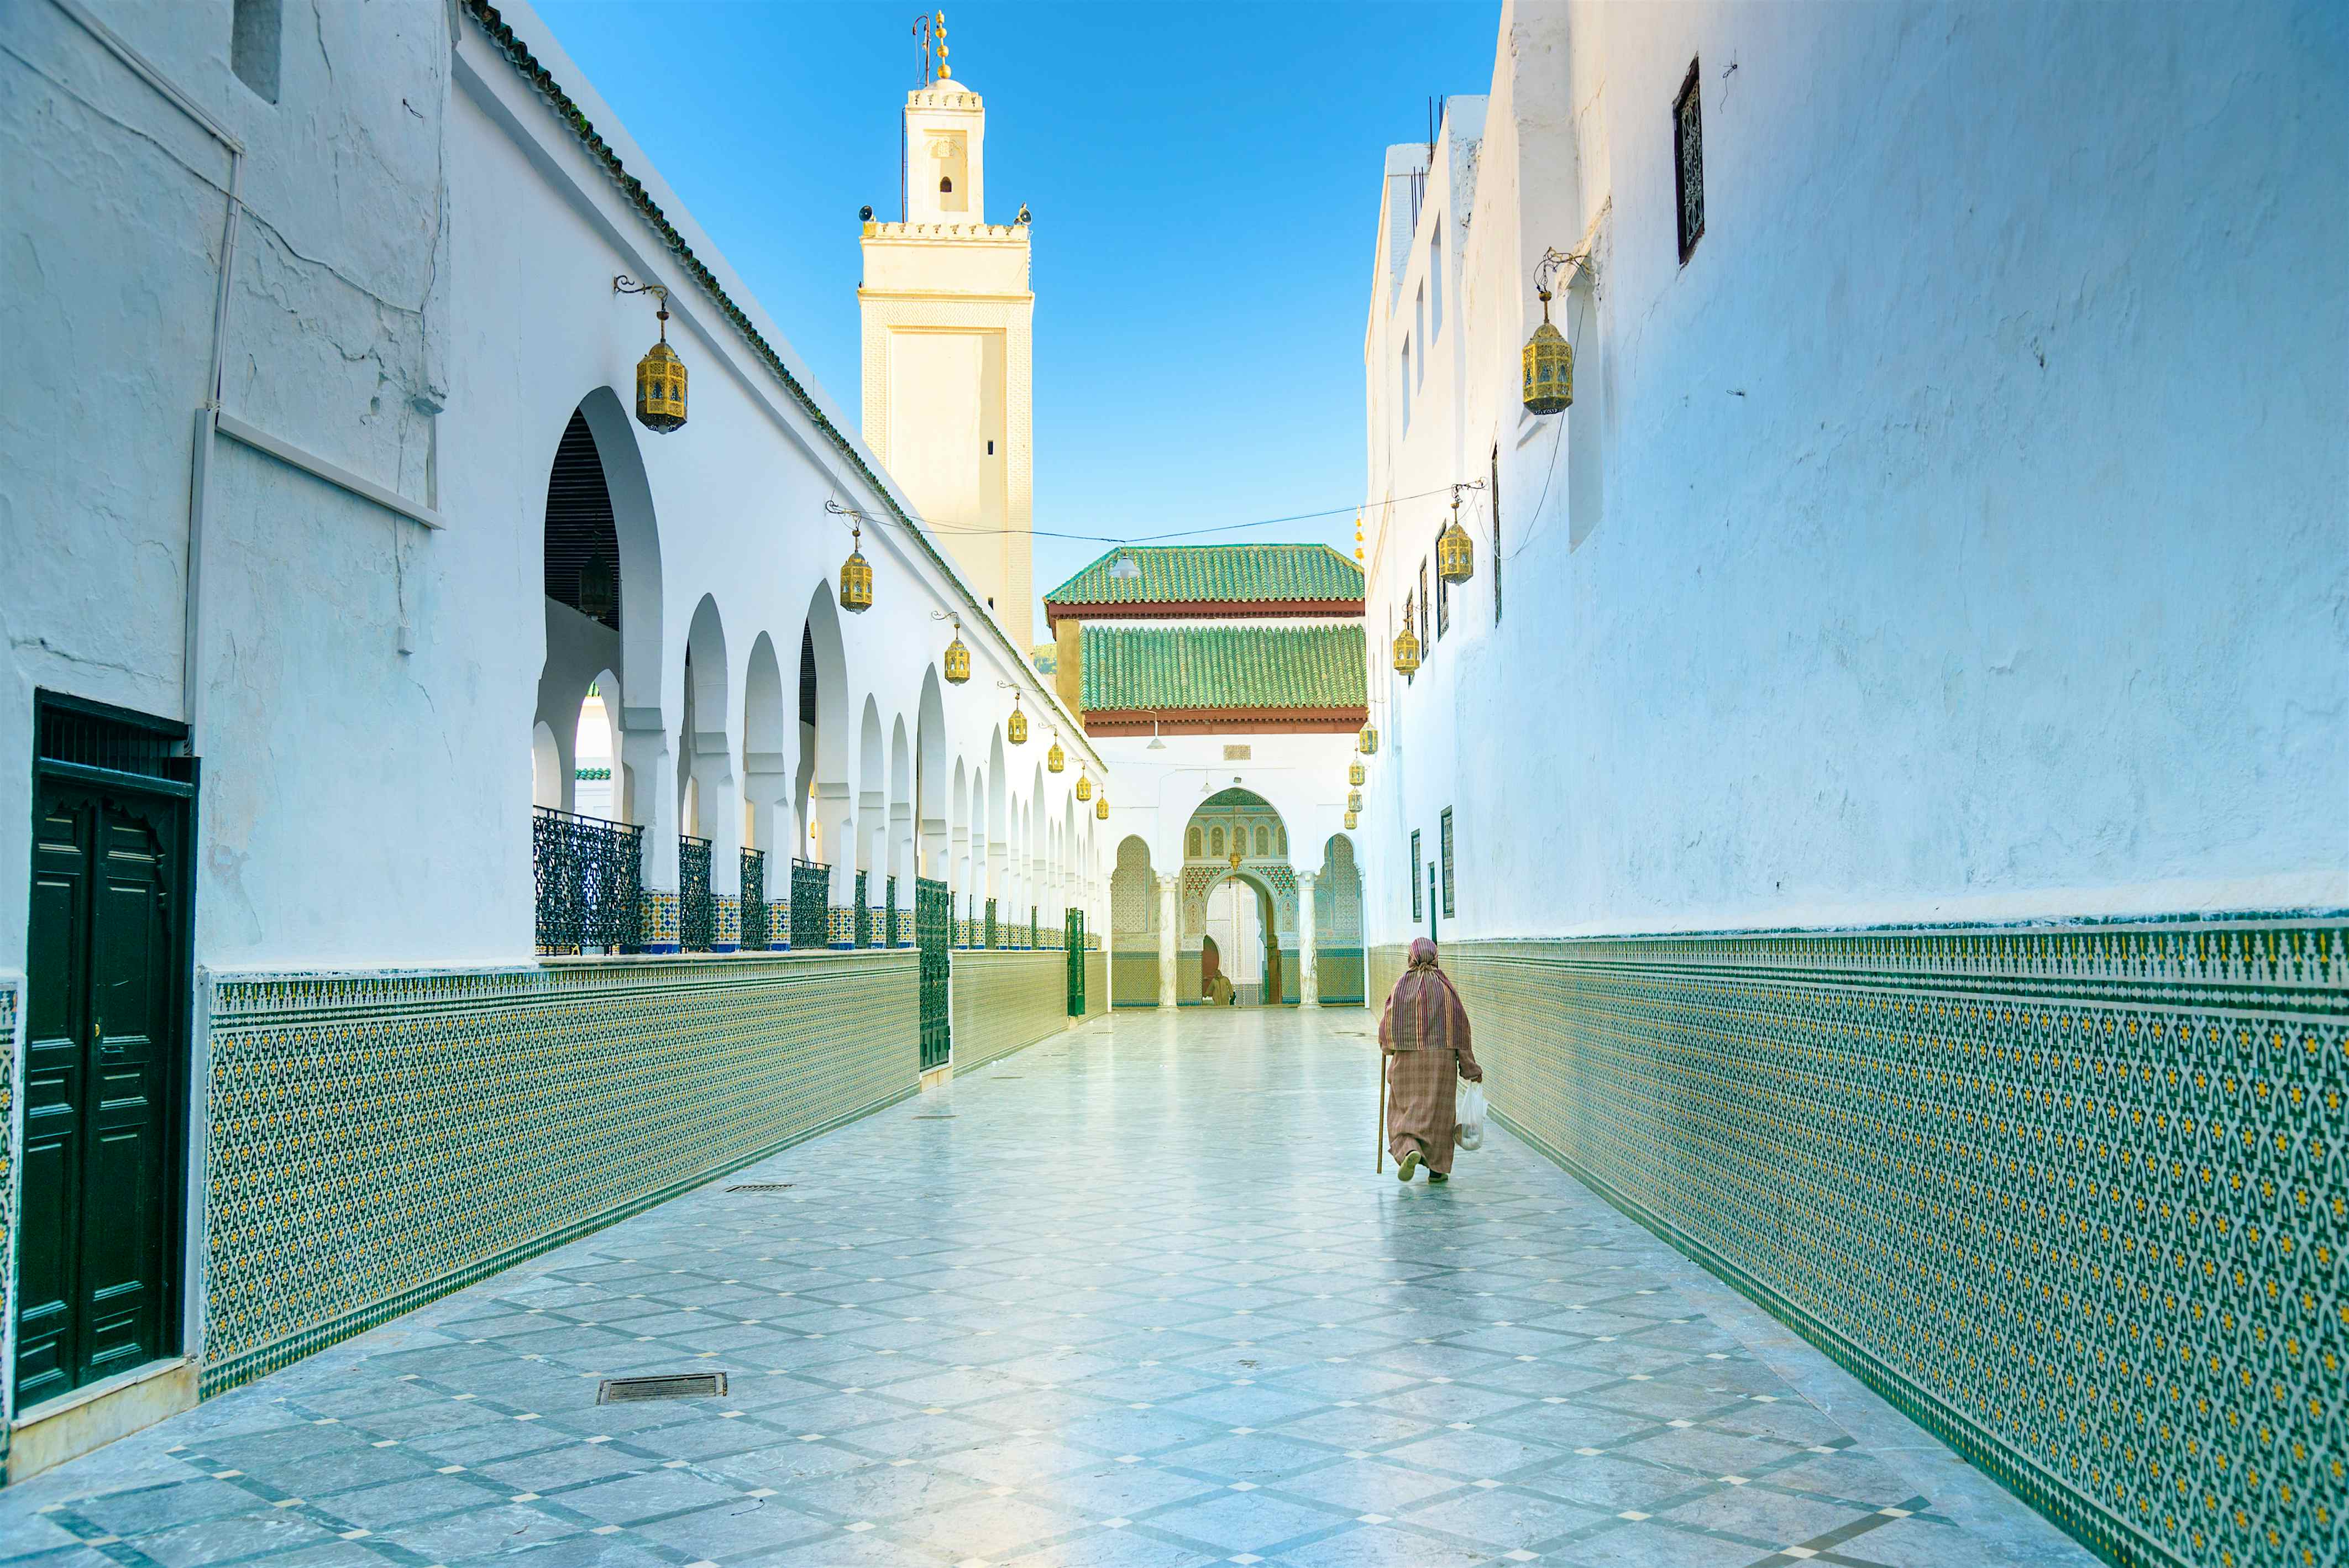 visit morocco.com